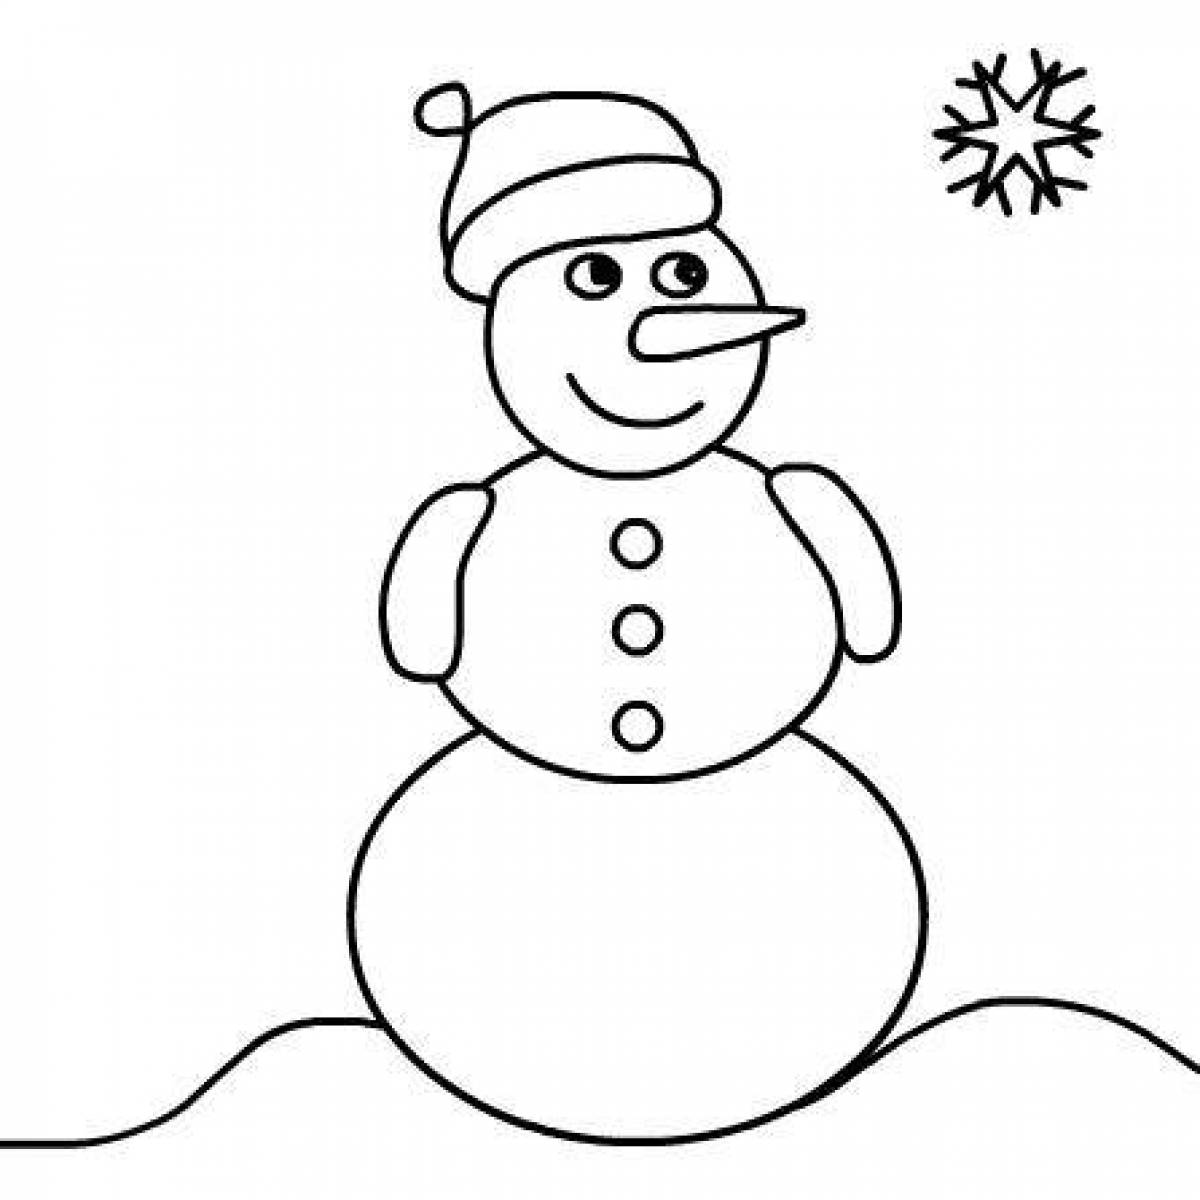 Снеговик нарисованный в паинте